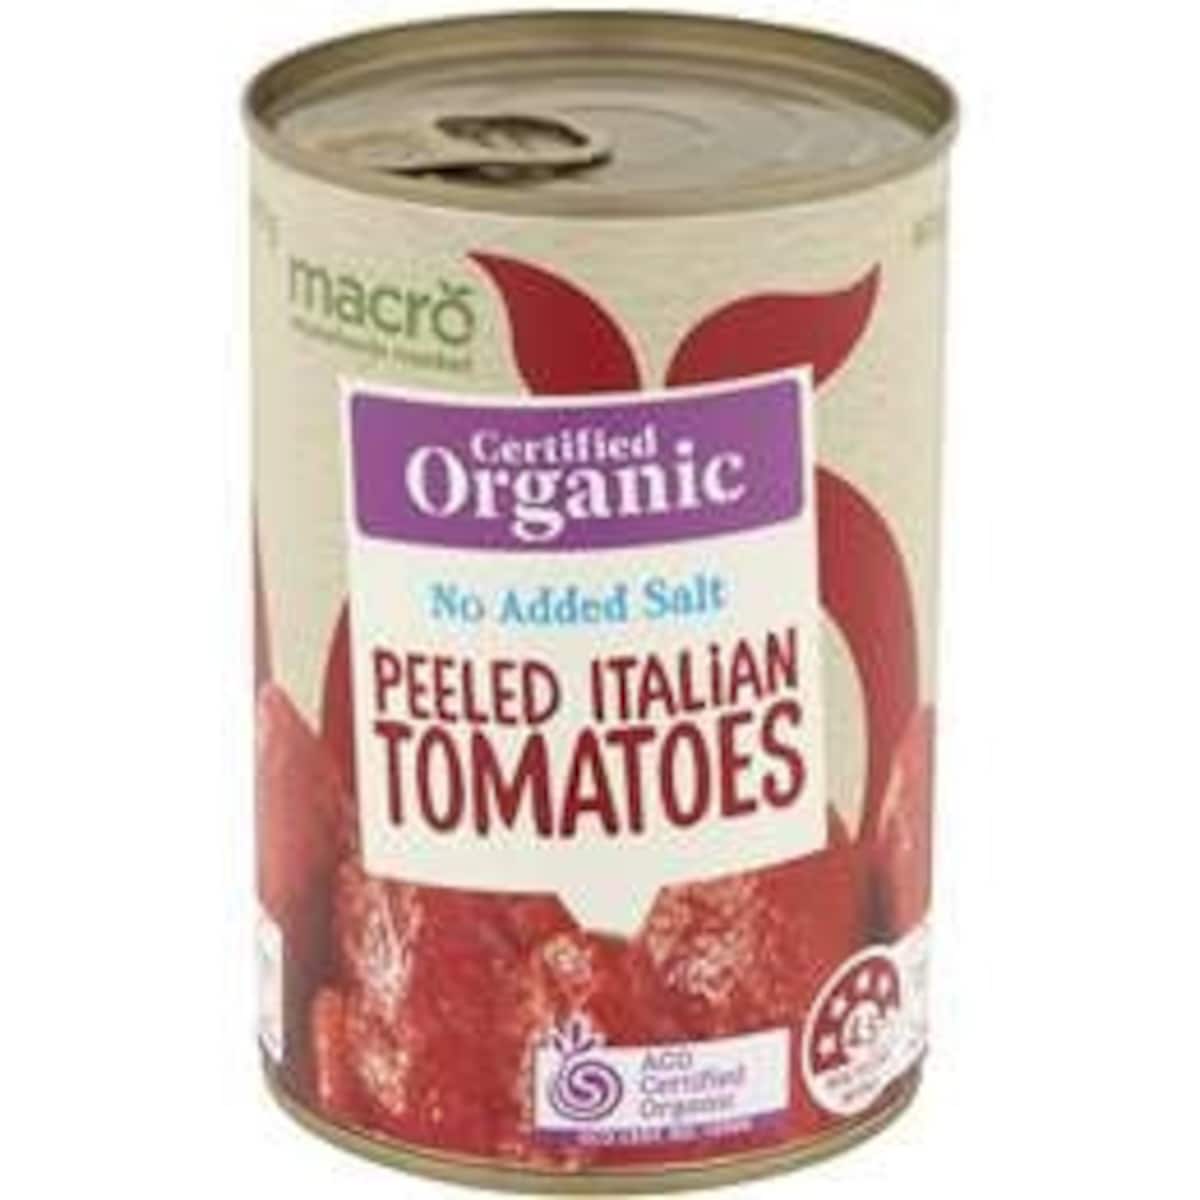 Macro Organc Peeled Italian Tomatoes No Added Salt 400g